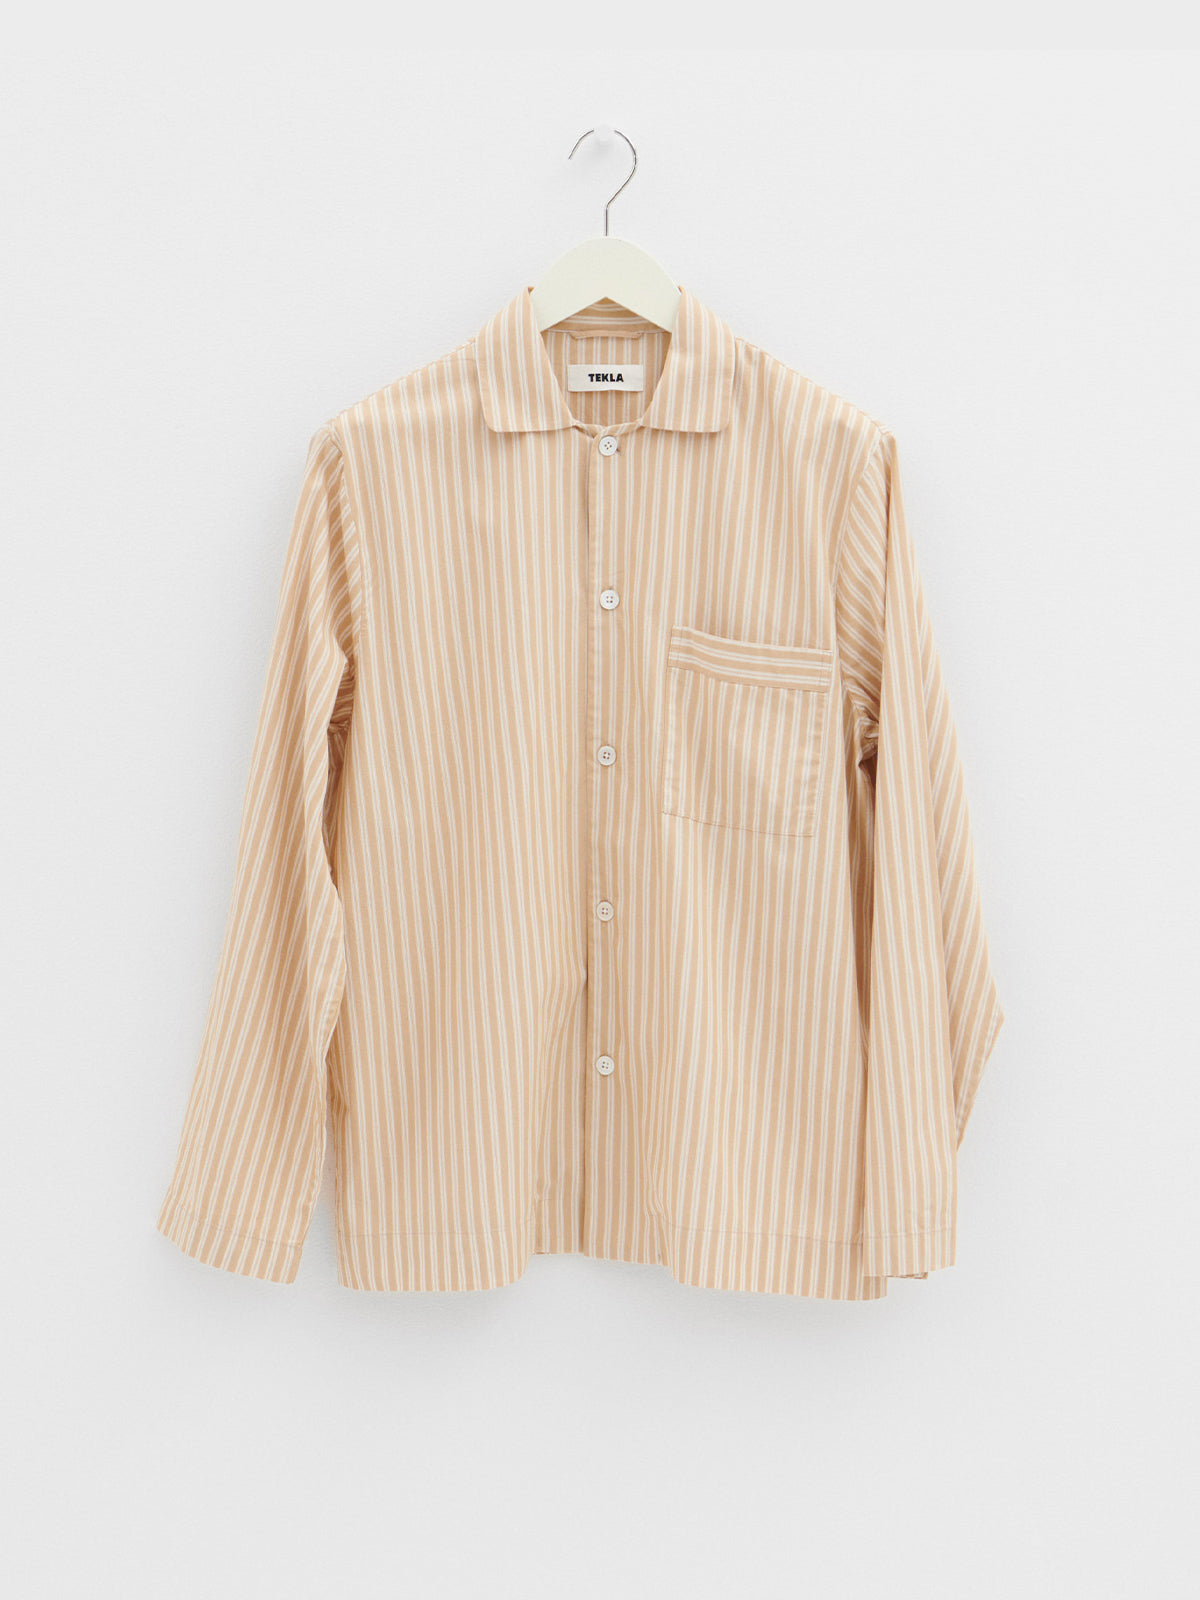 Tekla - Poplin Pyjamas Shirt in Corinth Stripes